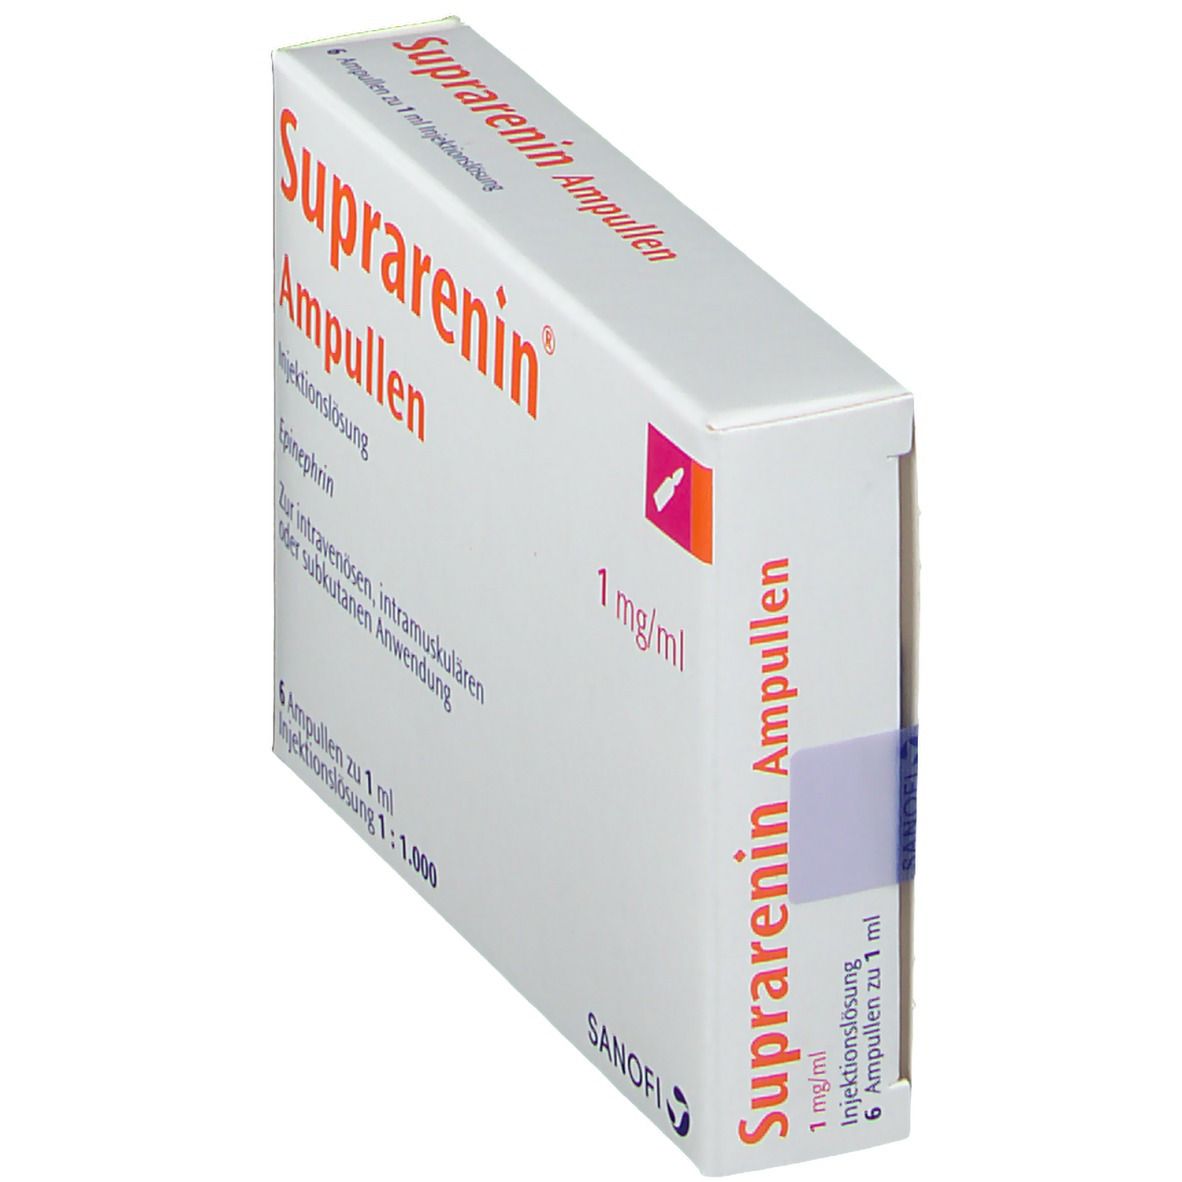 Suprarenin® AMPULLEN 1 mg/ml